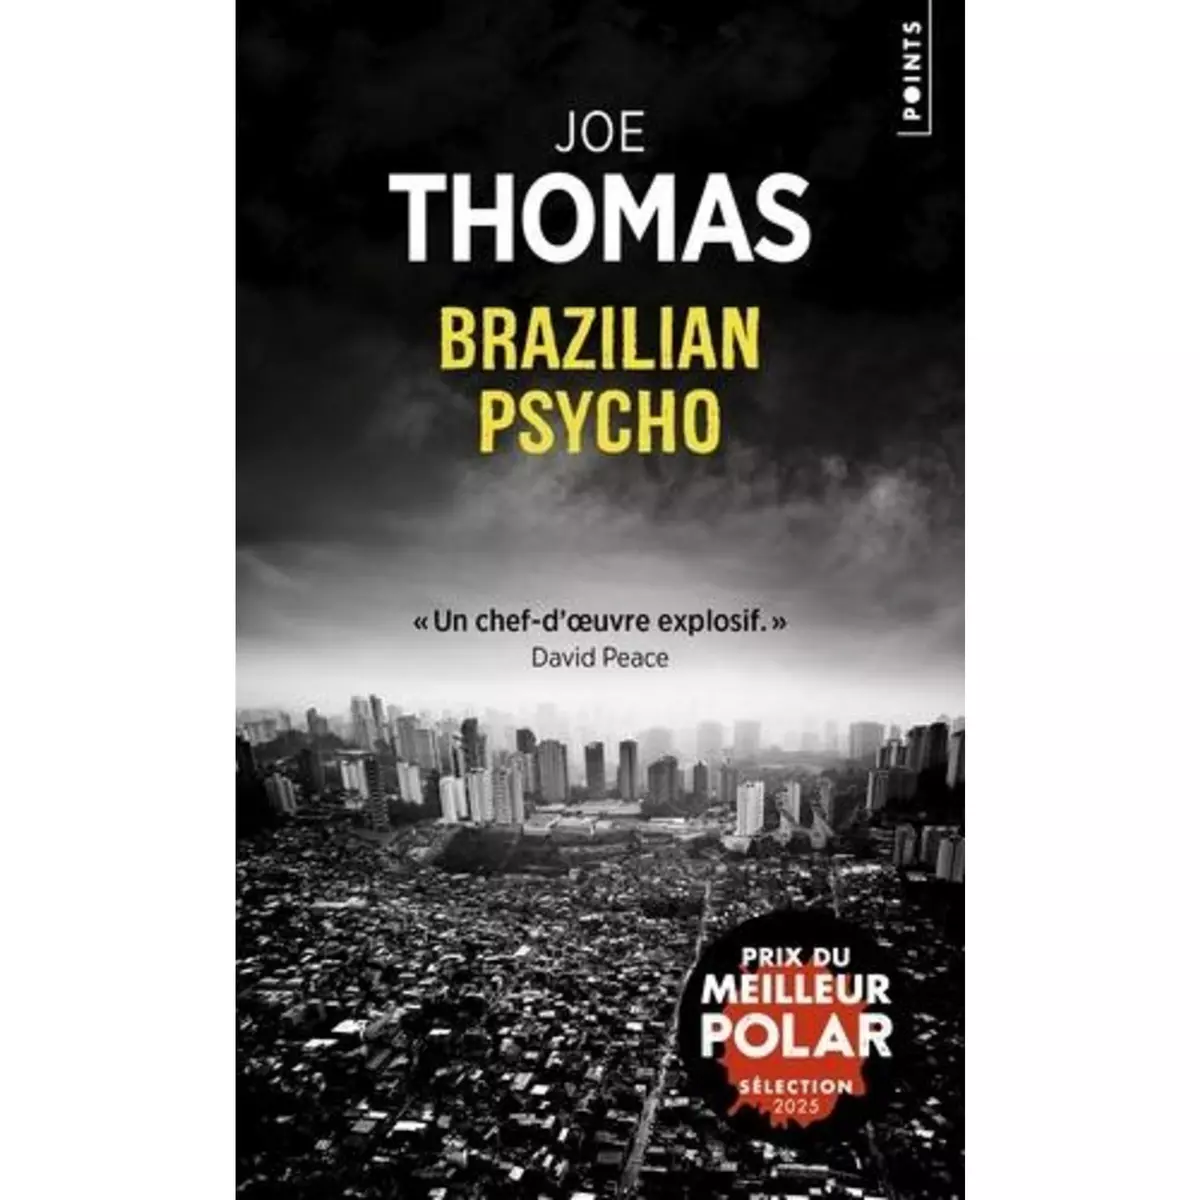  BRAZILIAN PSYCHO, Thomas Joe